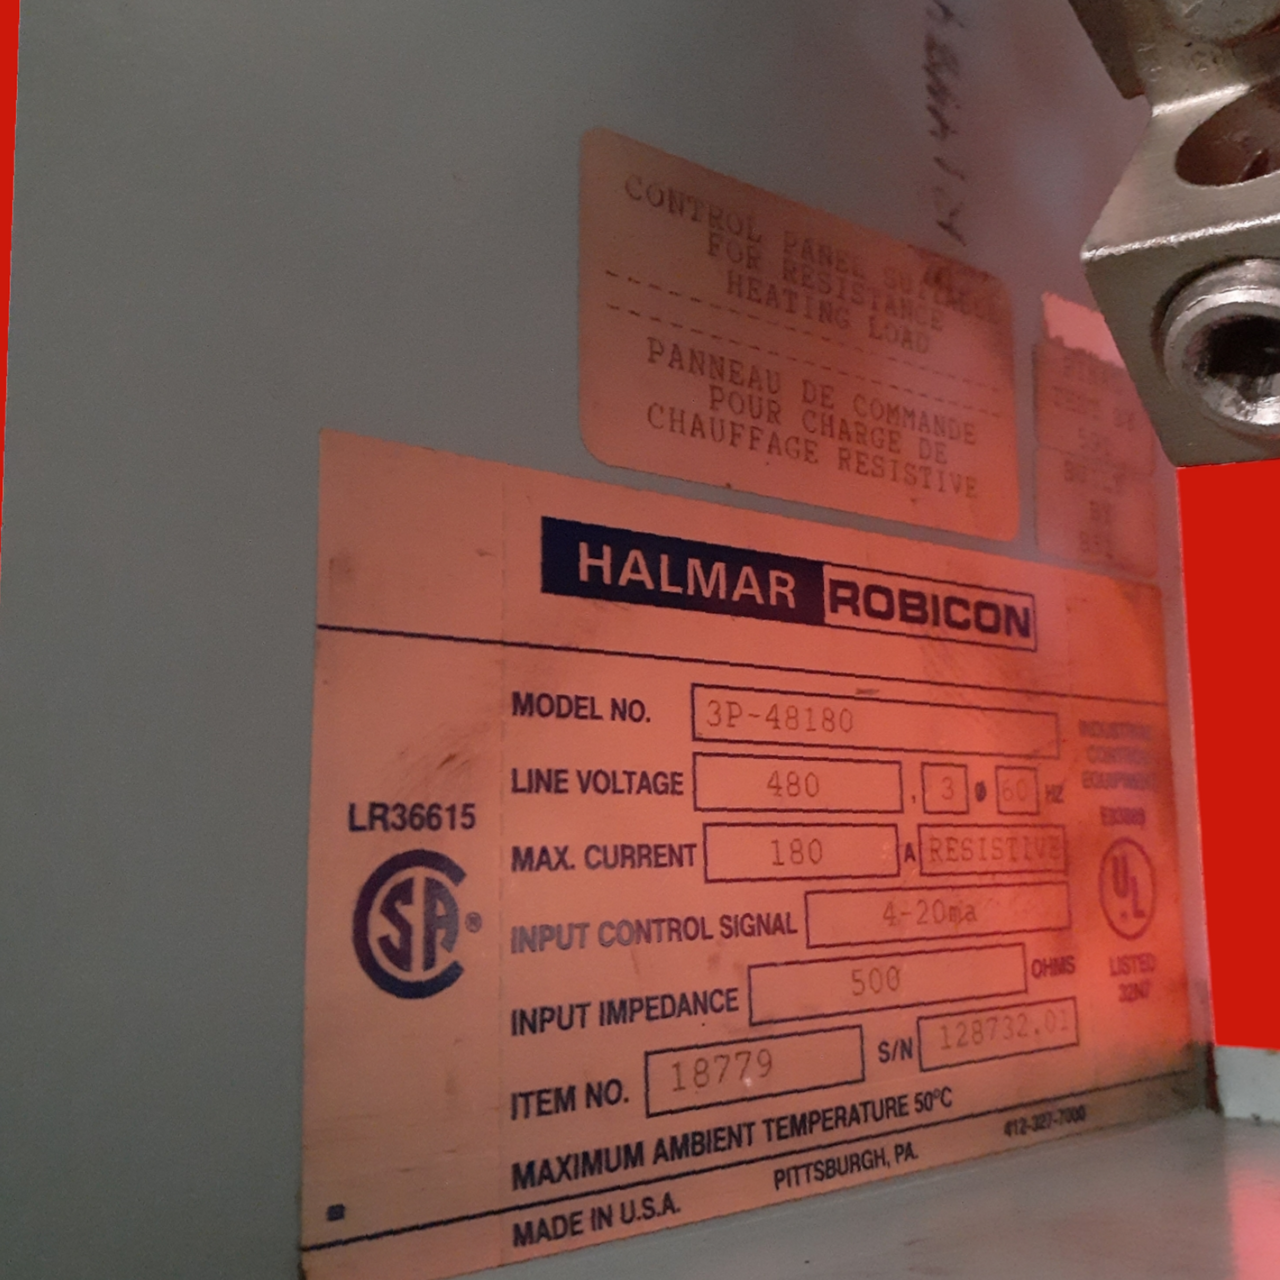 Halmar Robicon SCR Power Controller, 3P-48180